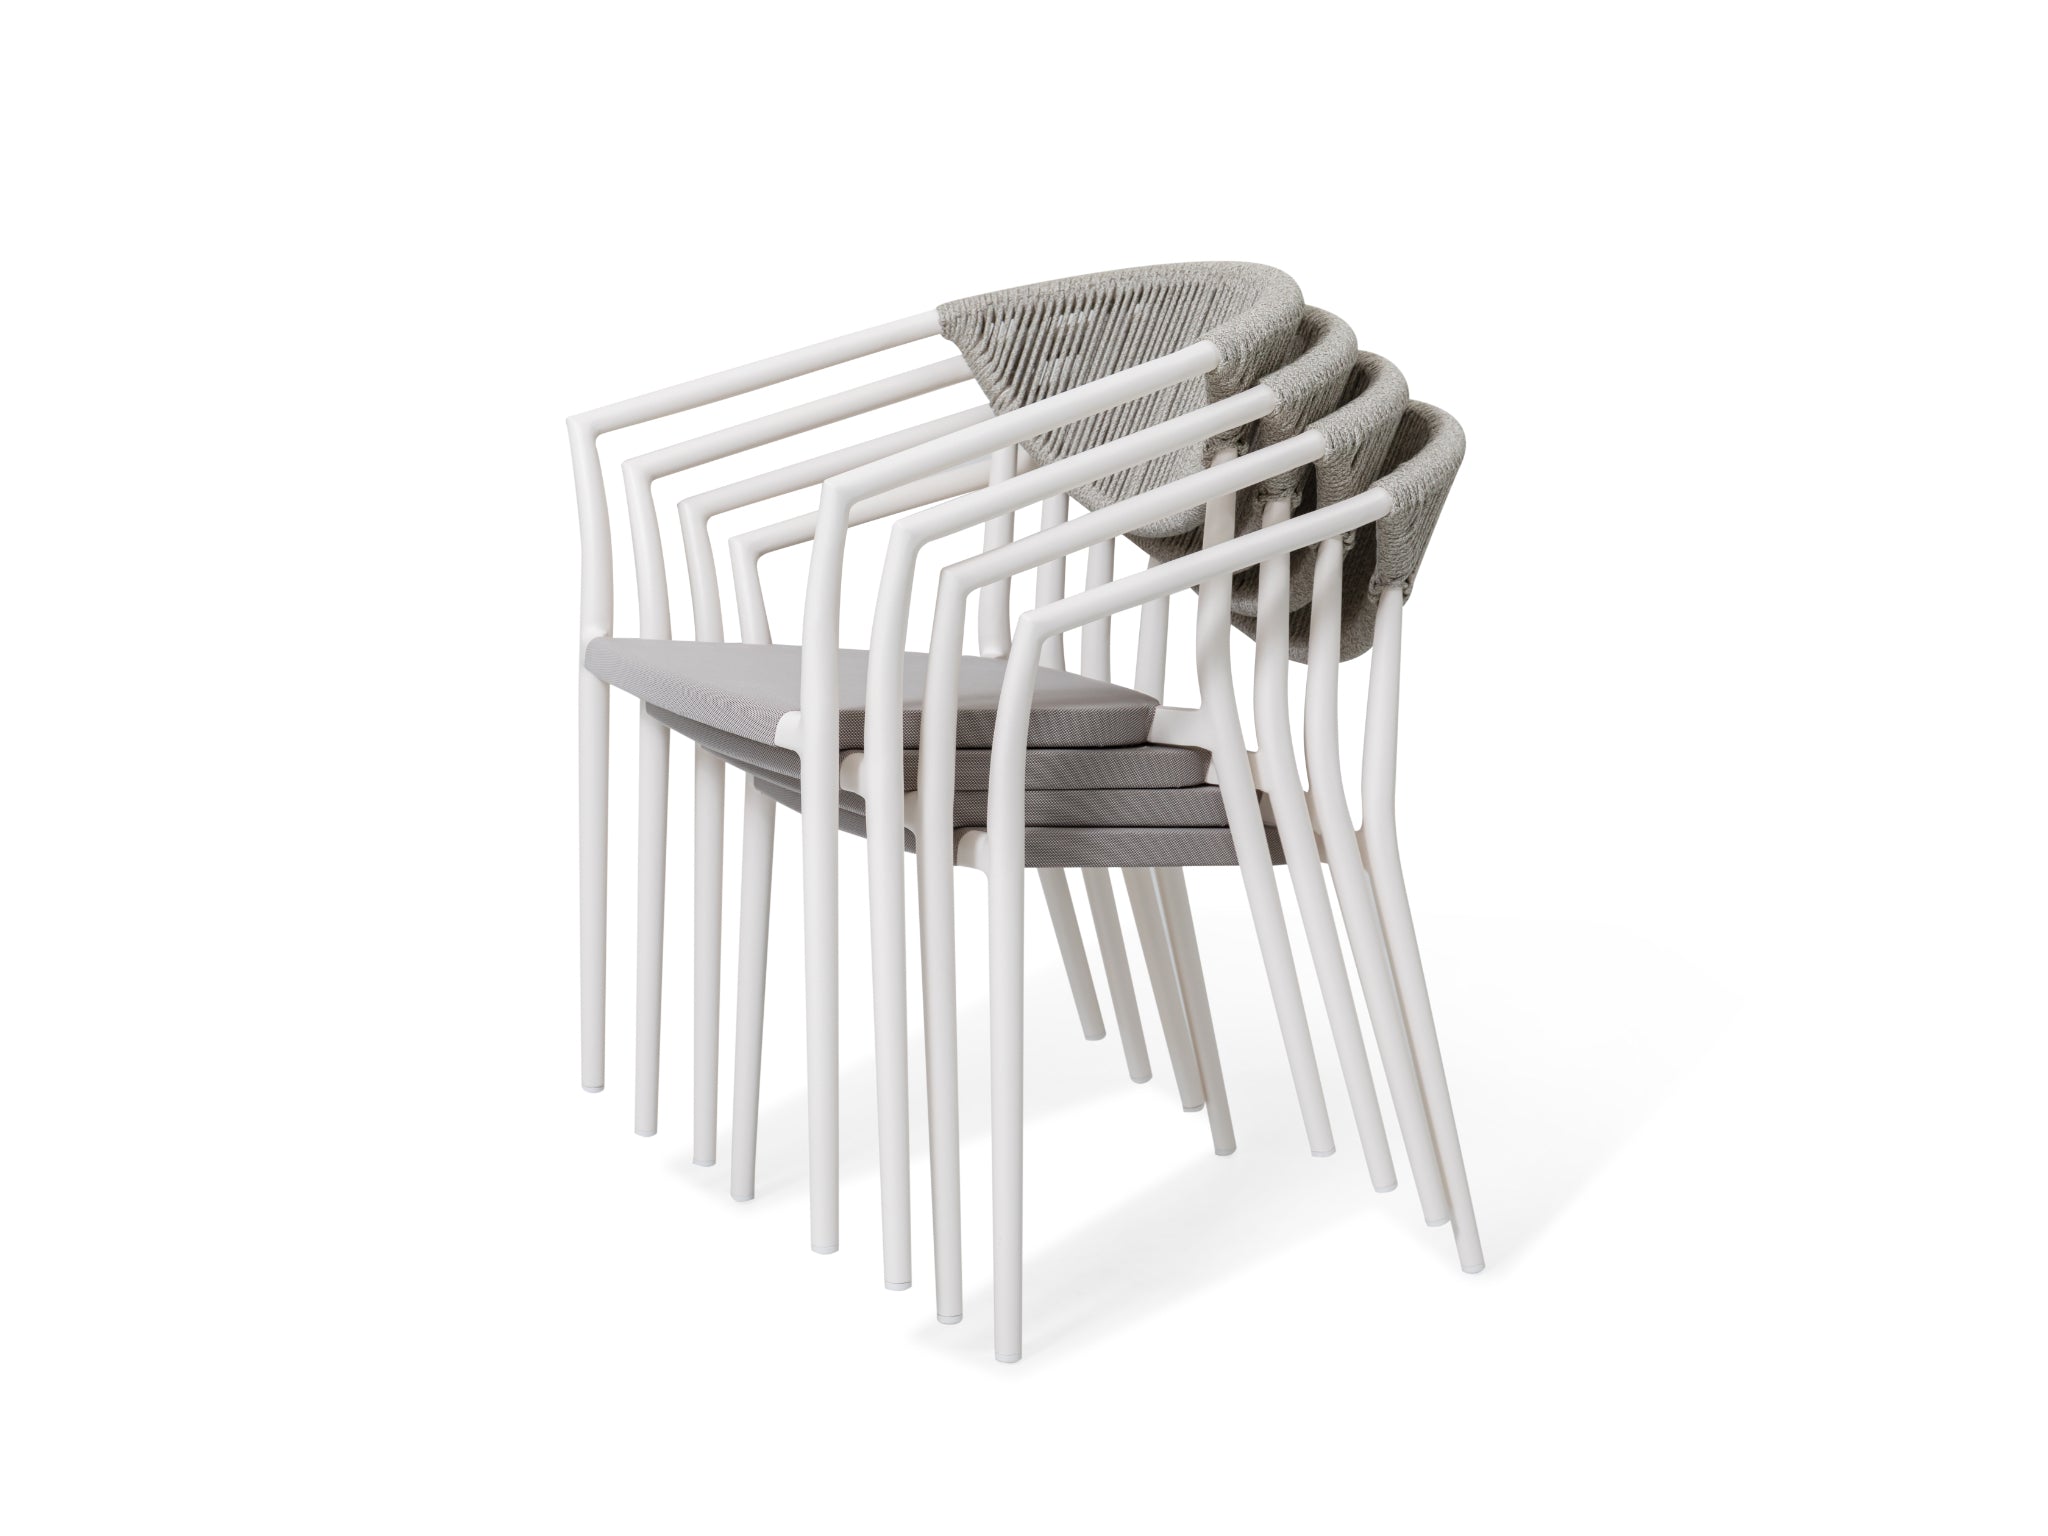 SIMPO by Sunlongarden Fino Dining Chair